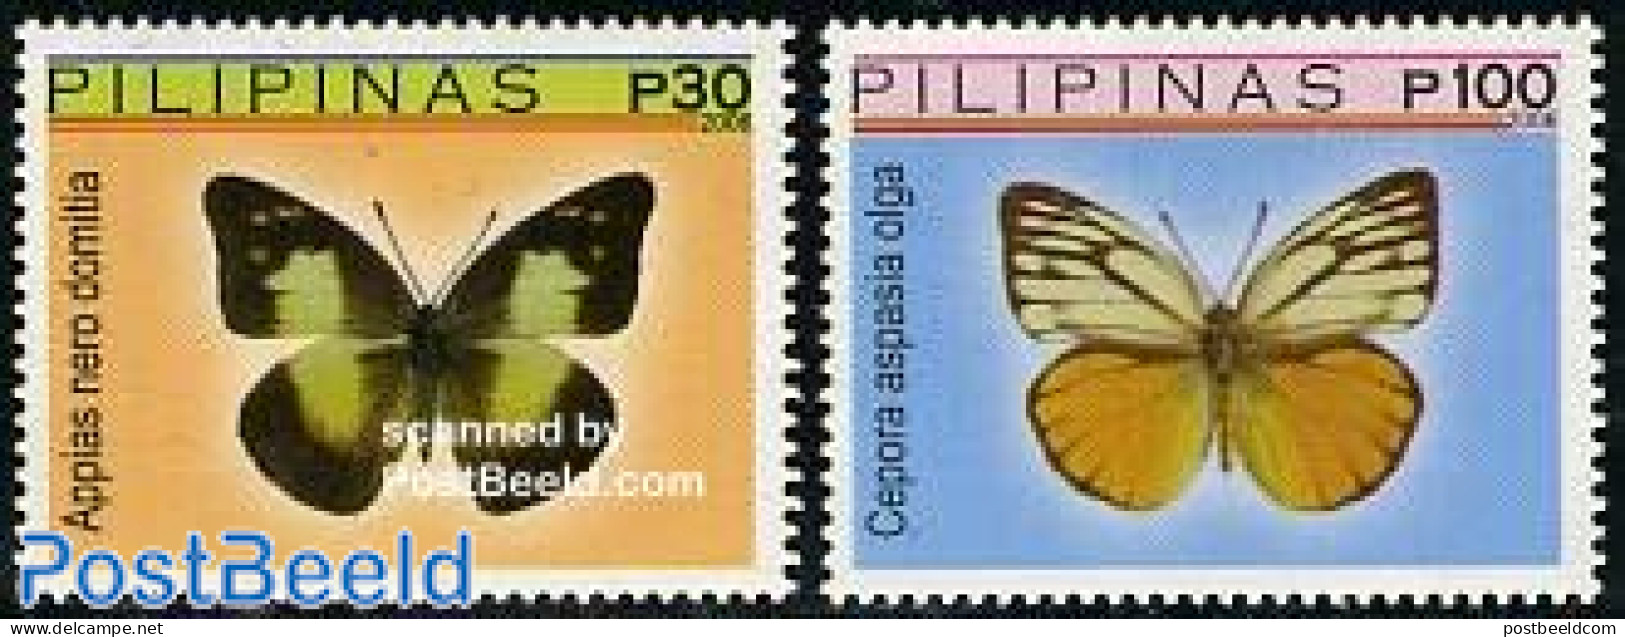 Philippines 2006 Butterflies 2v, Mint NH, Nature - Butterflies - Philippines